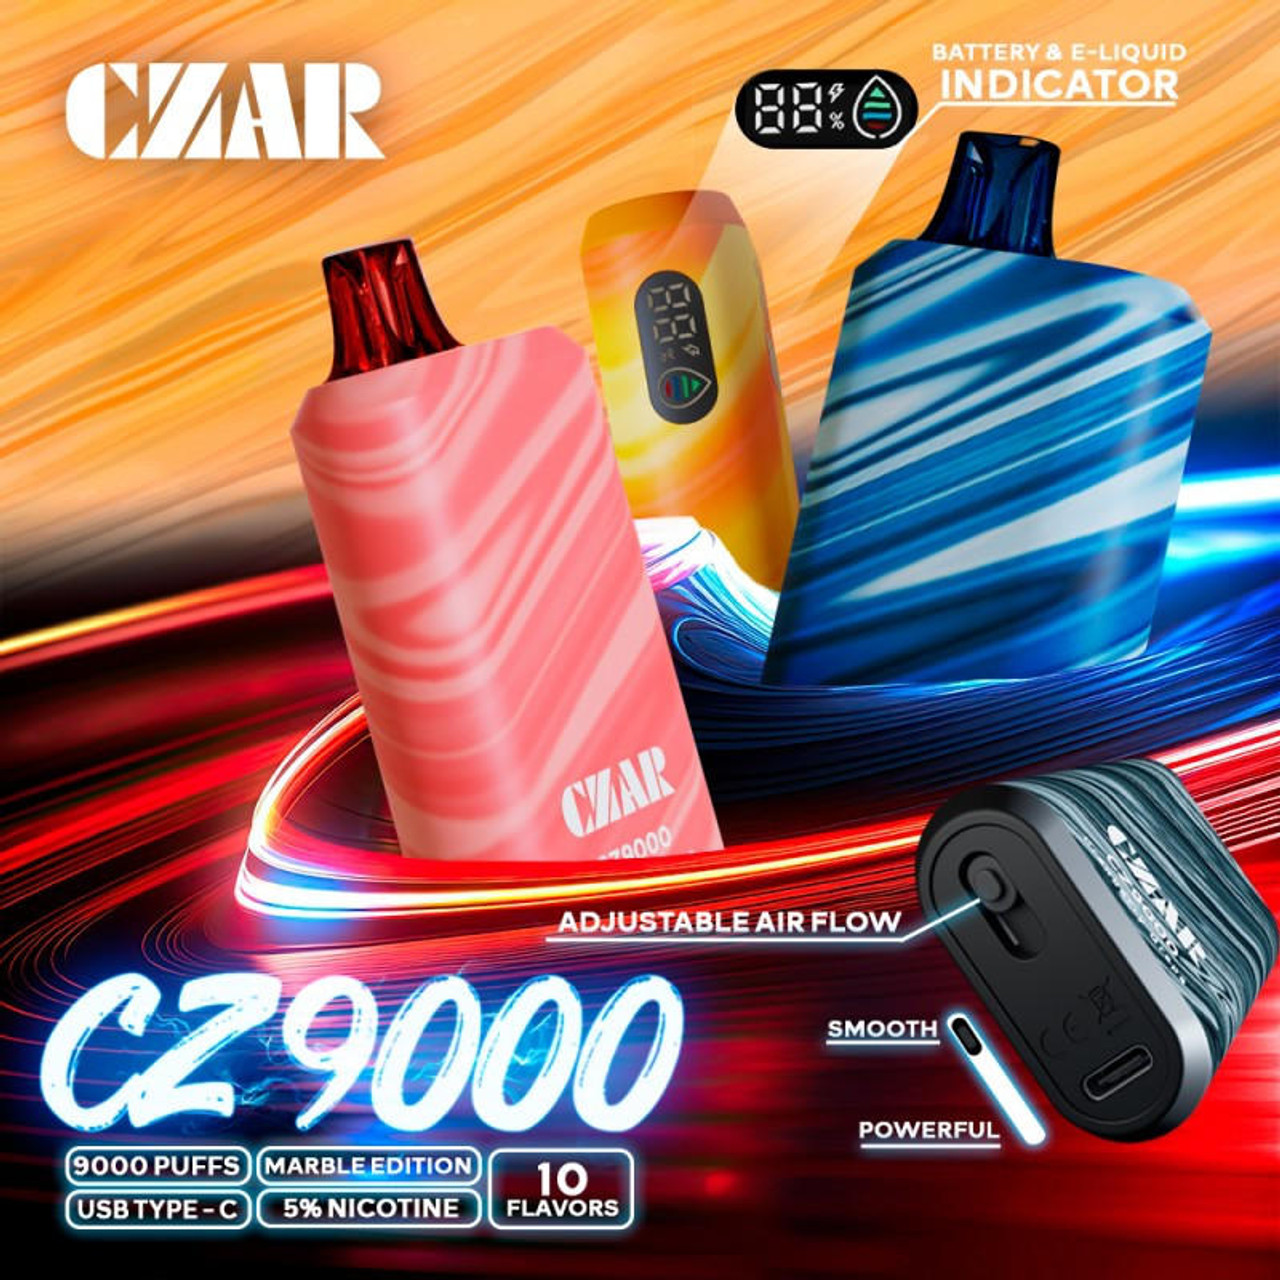 Czar CZ9000 - $11.45